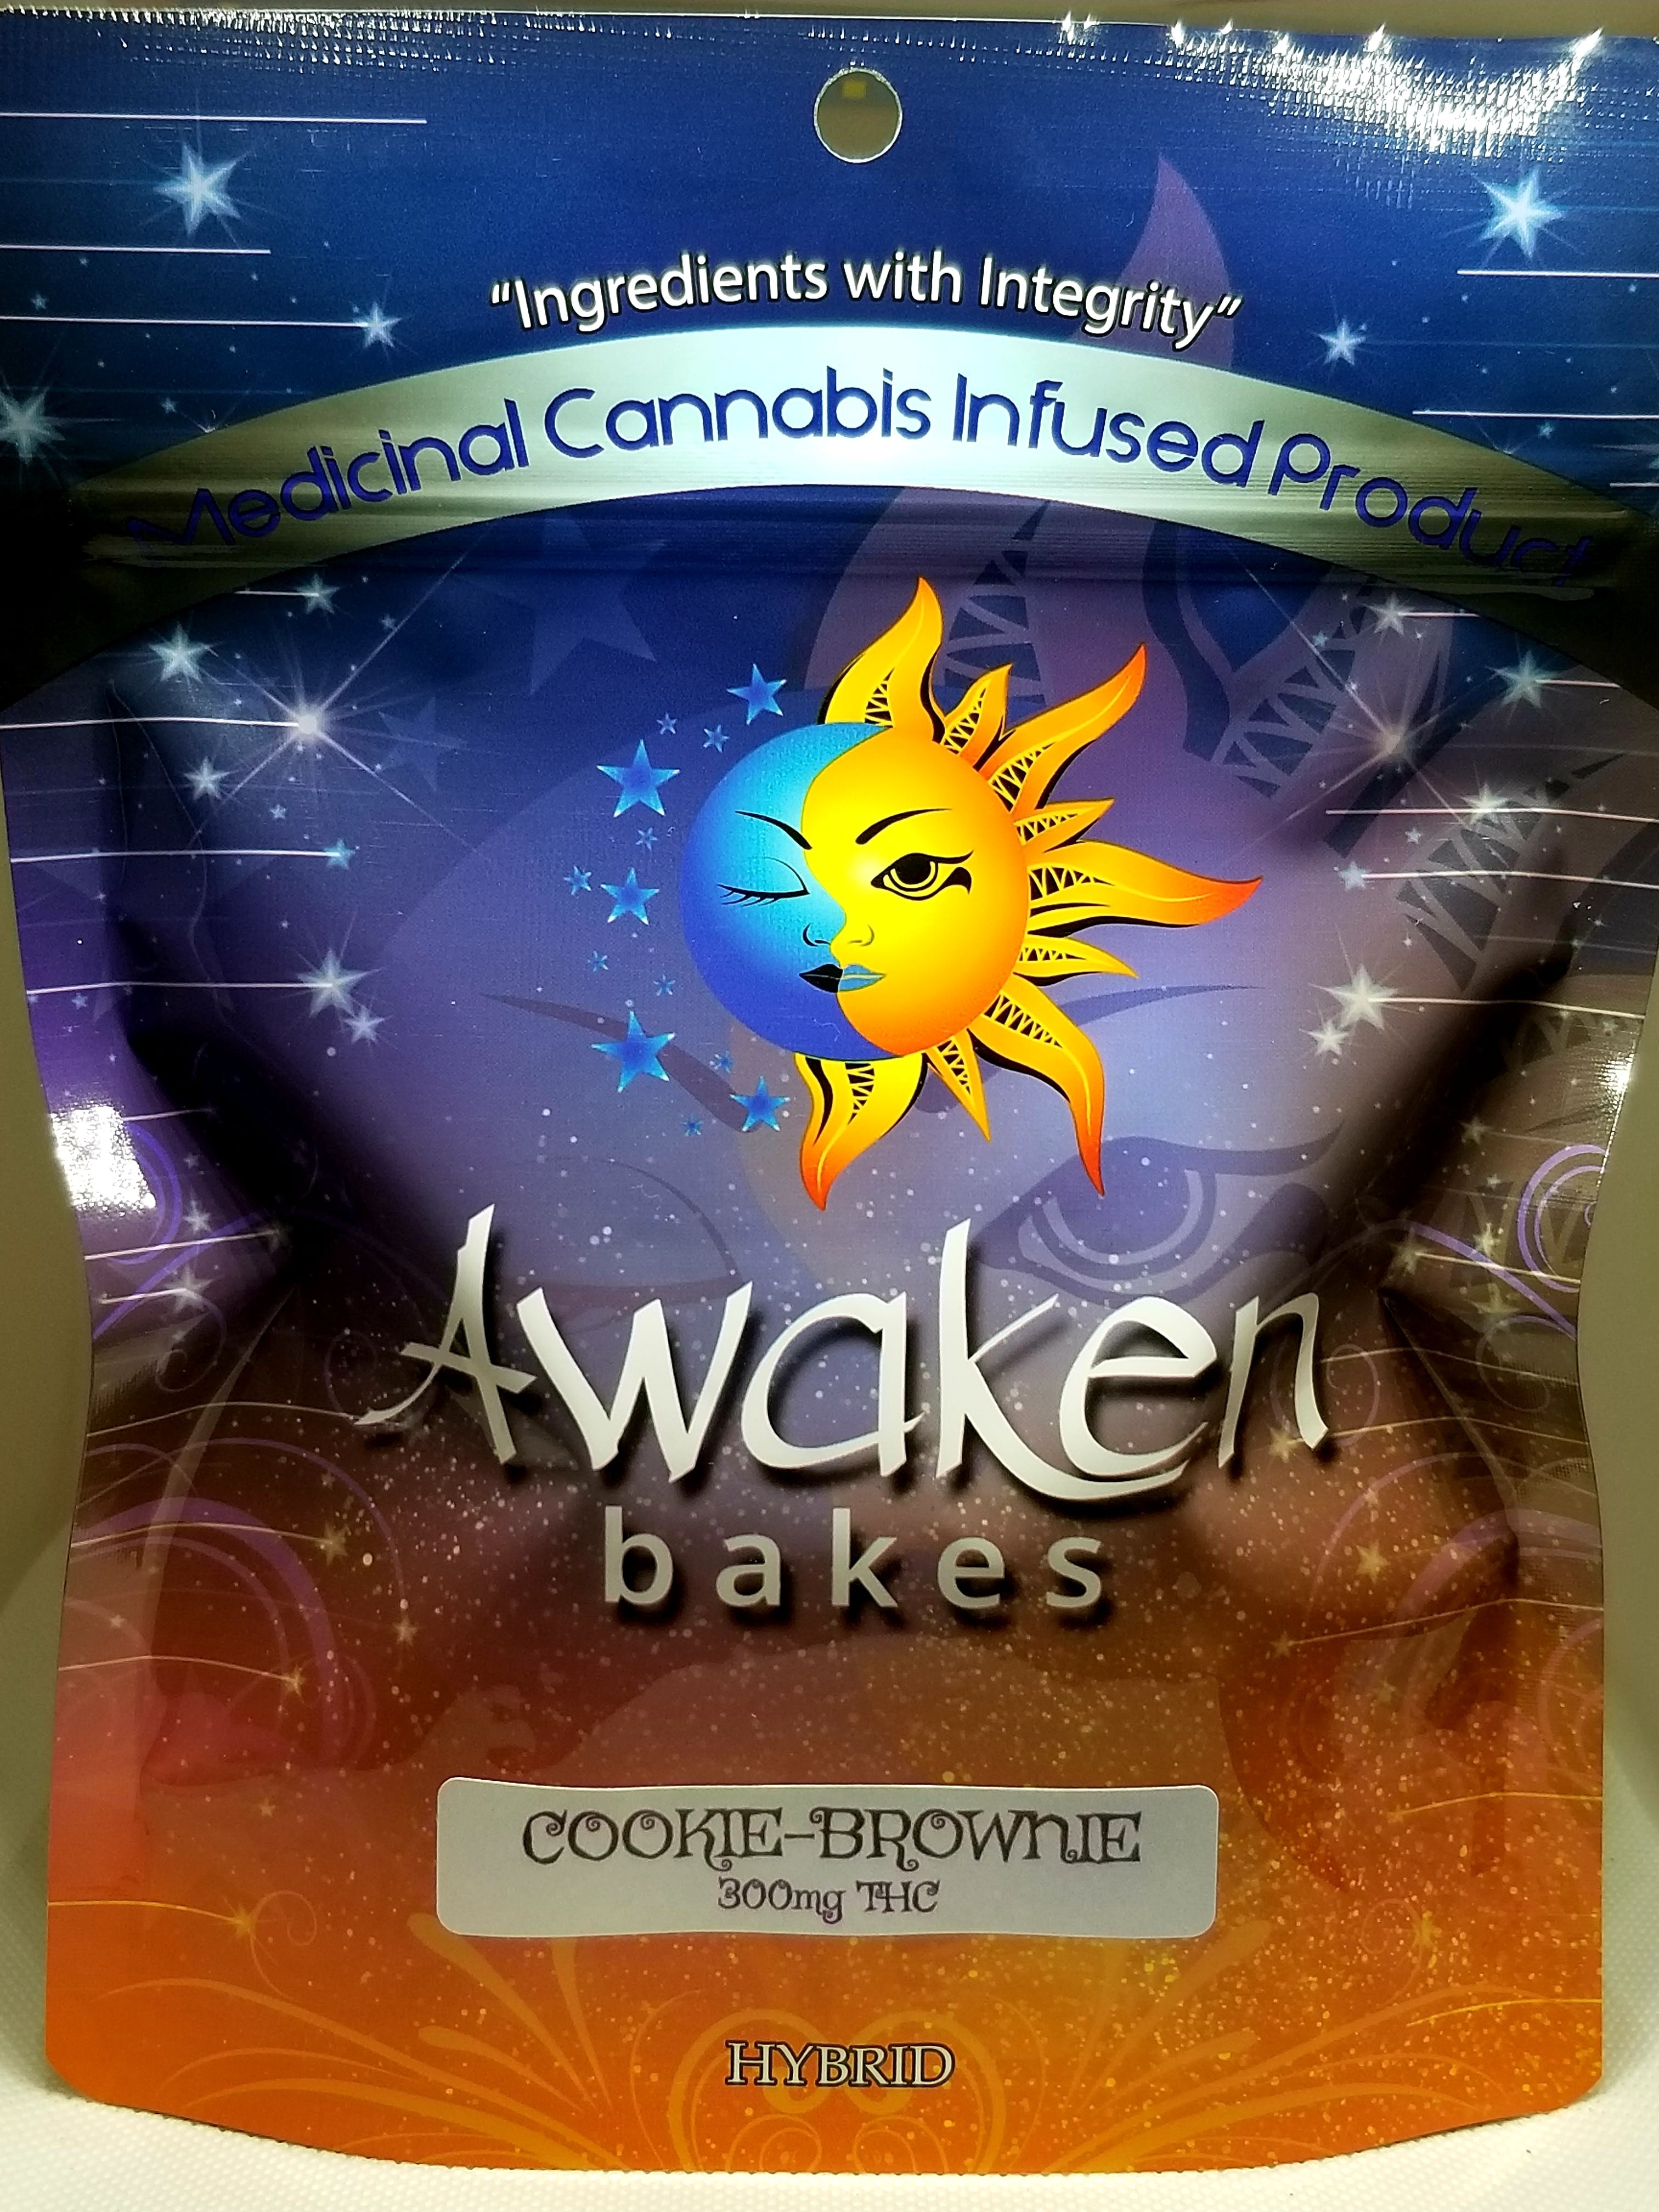 marijuana-dispensaries-1609-east-chapman-ave-orange-awaken-bakes-cookiebrownie-300mg-hybrid